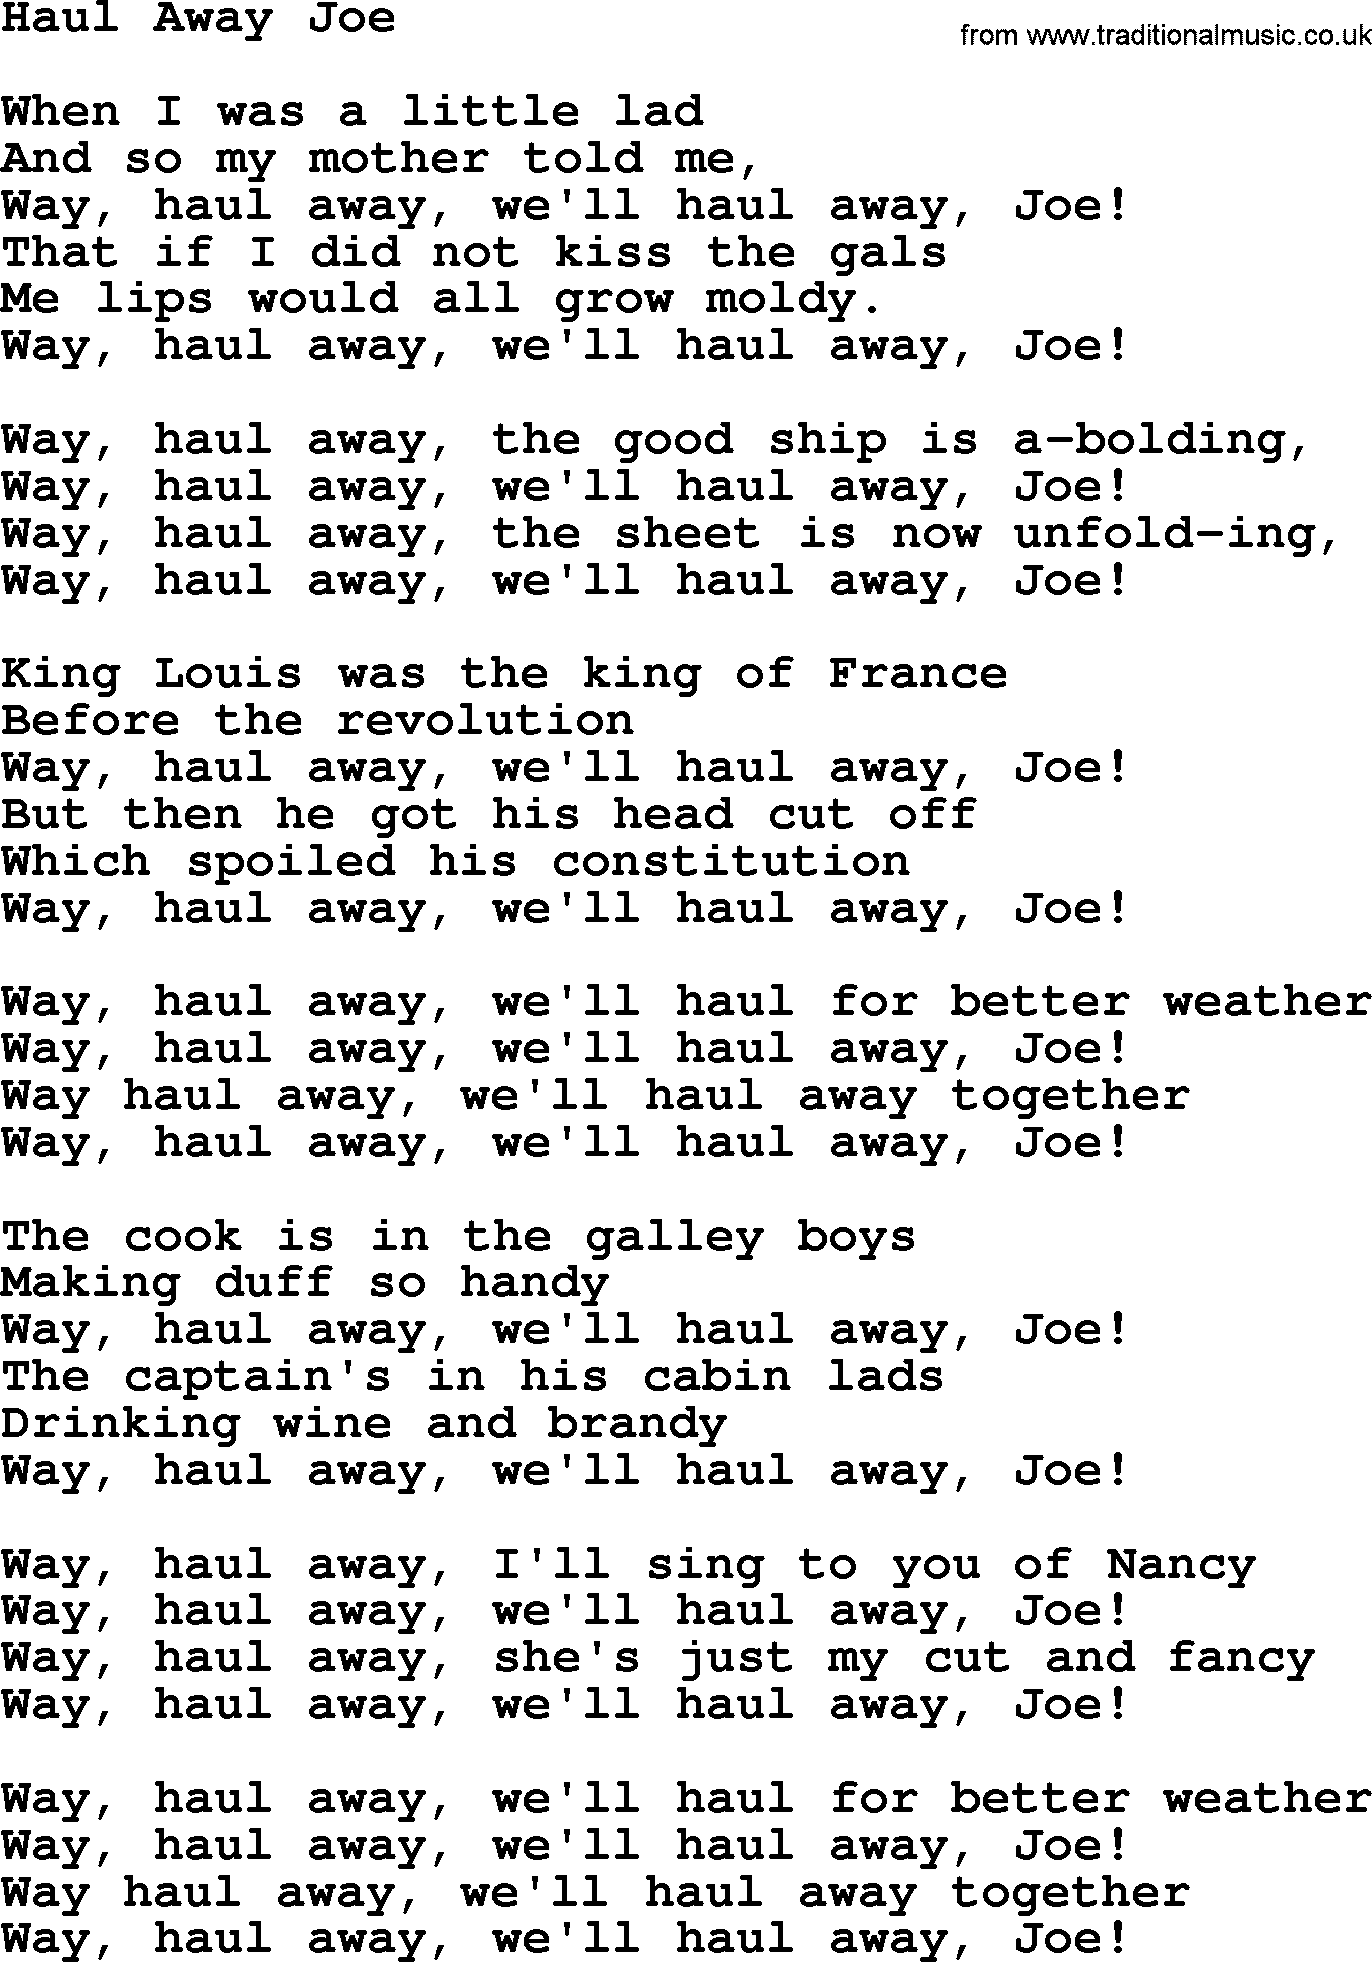 The Byrds song Haul Away Joe, lyrics